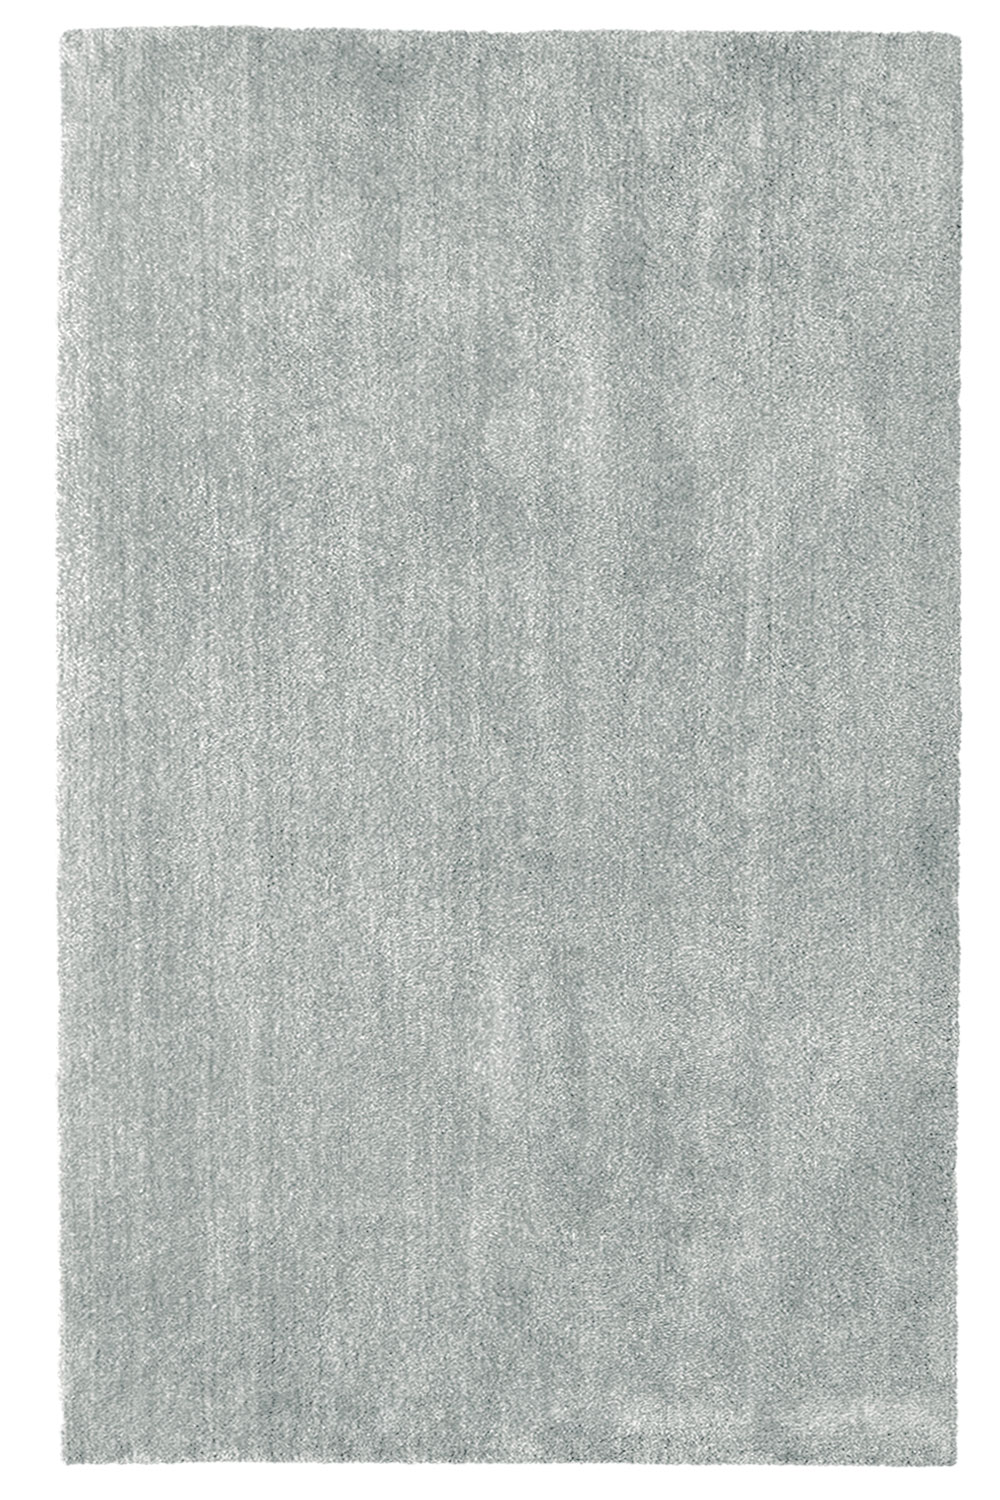 Kusový koberec Labrador 71351 060 L.Grey 60x115 cm